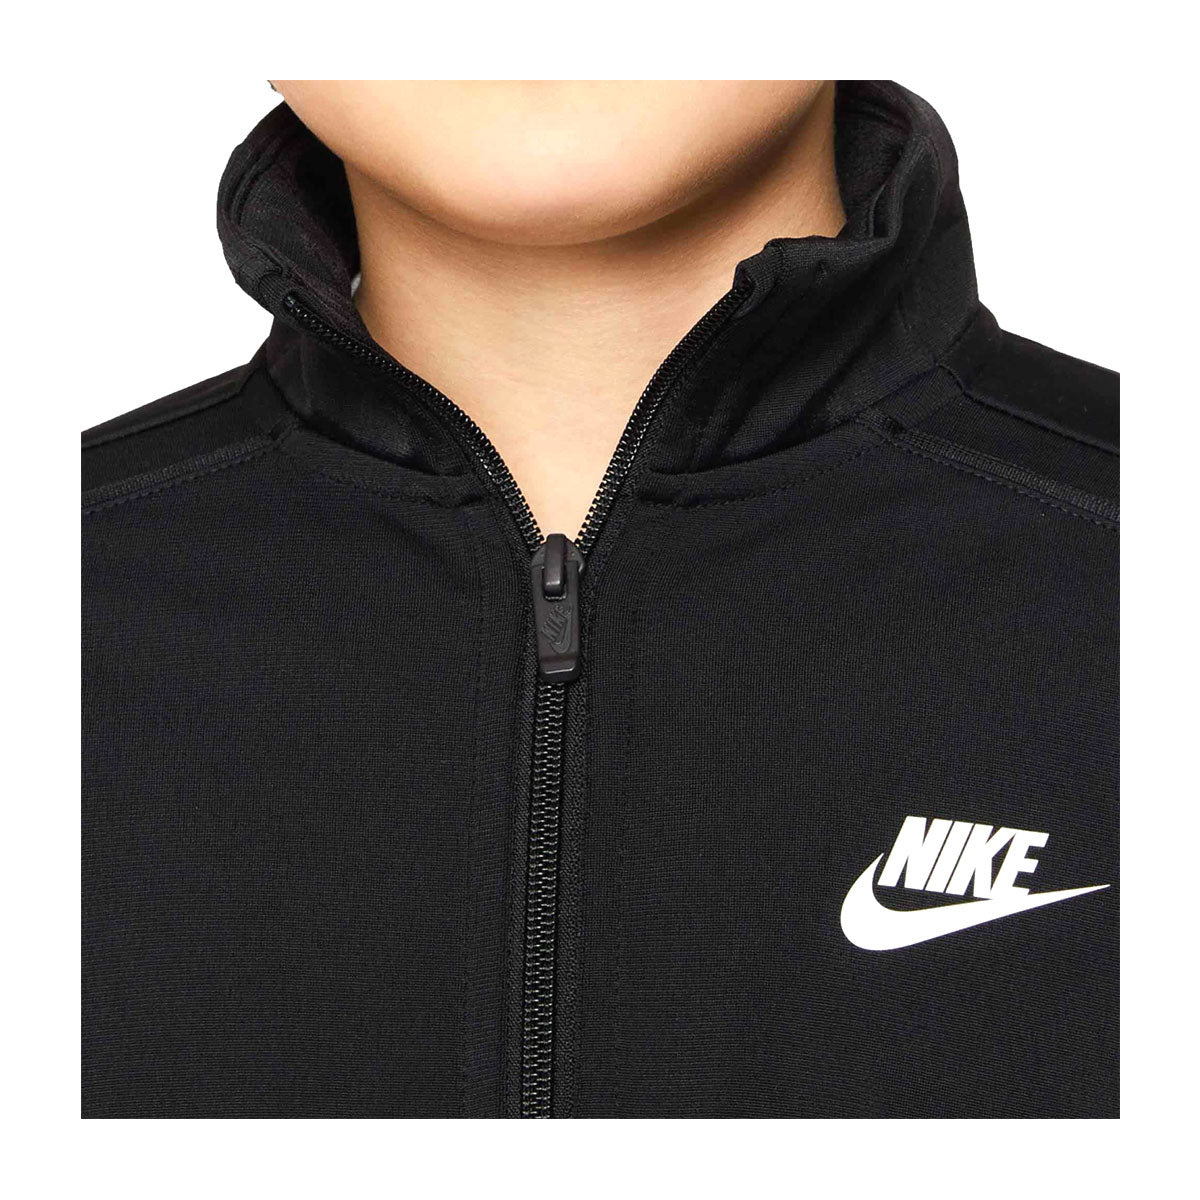 Nike Boys Sportswear Tracksuit - KickzStore